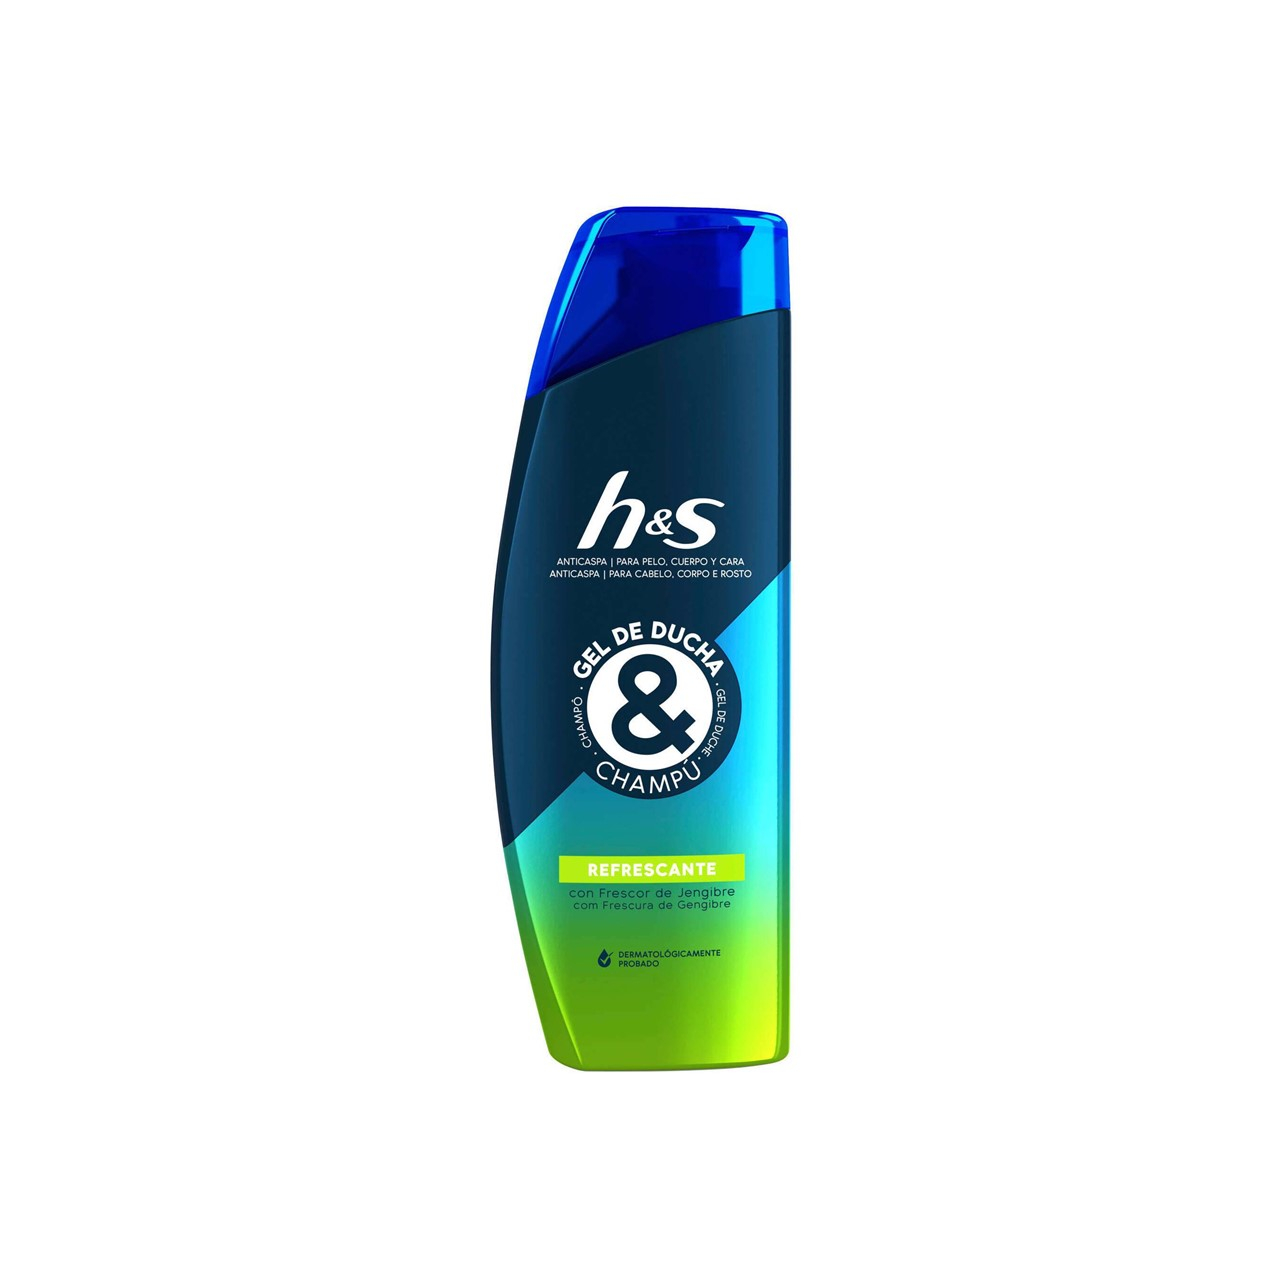 H&S Refreshing Shower Gel & Shampoo 300ml (10.14fl oz)